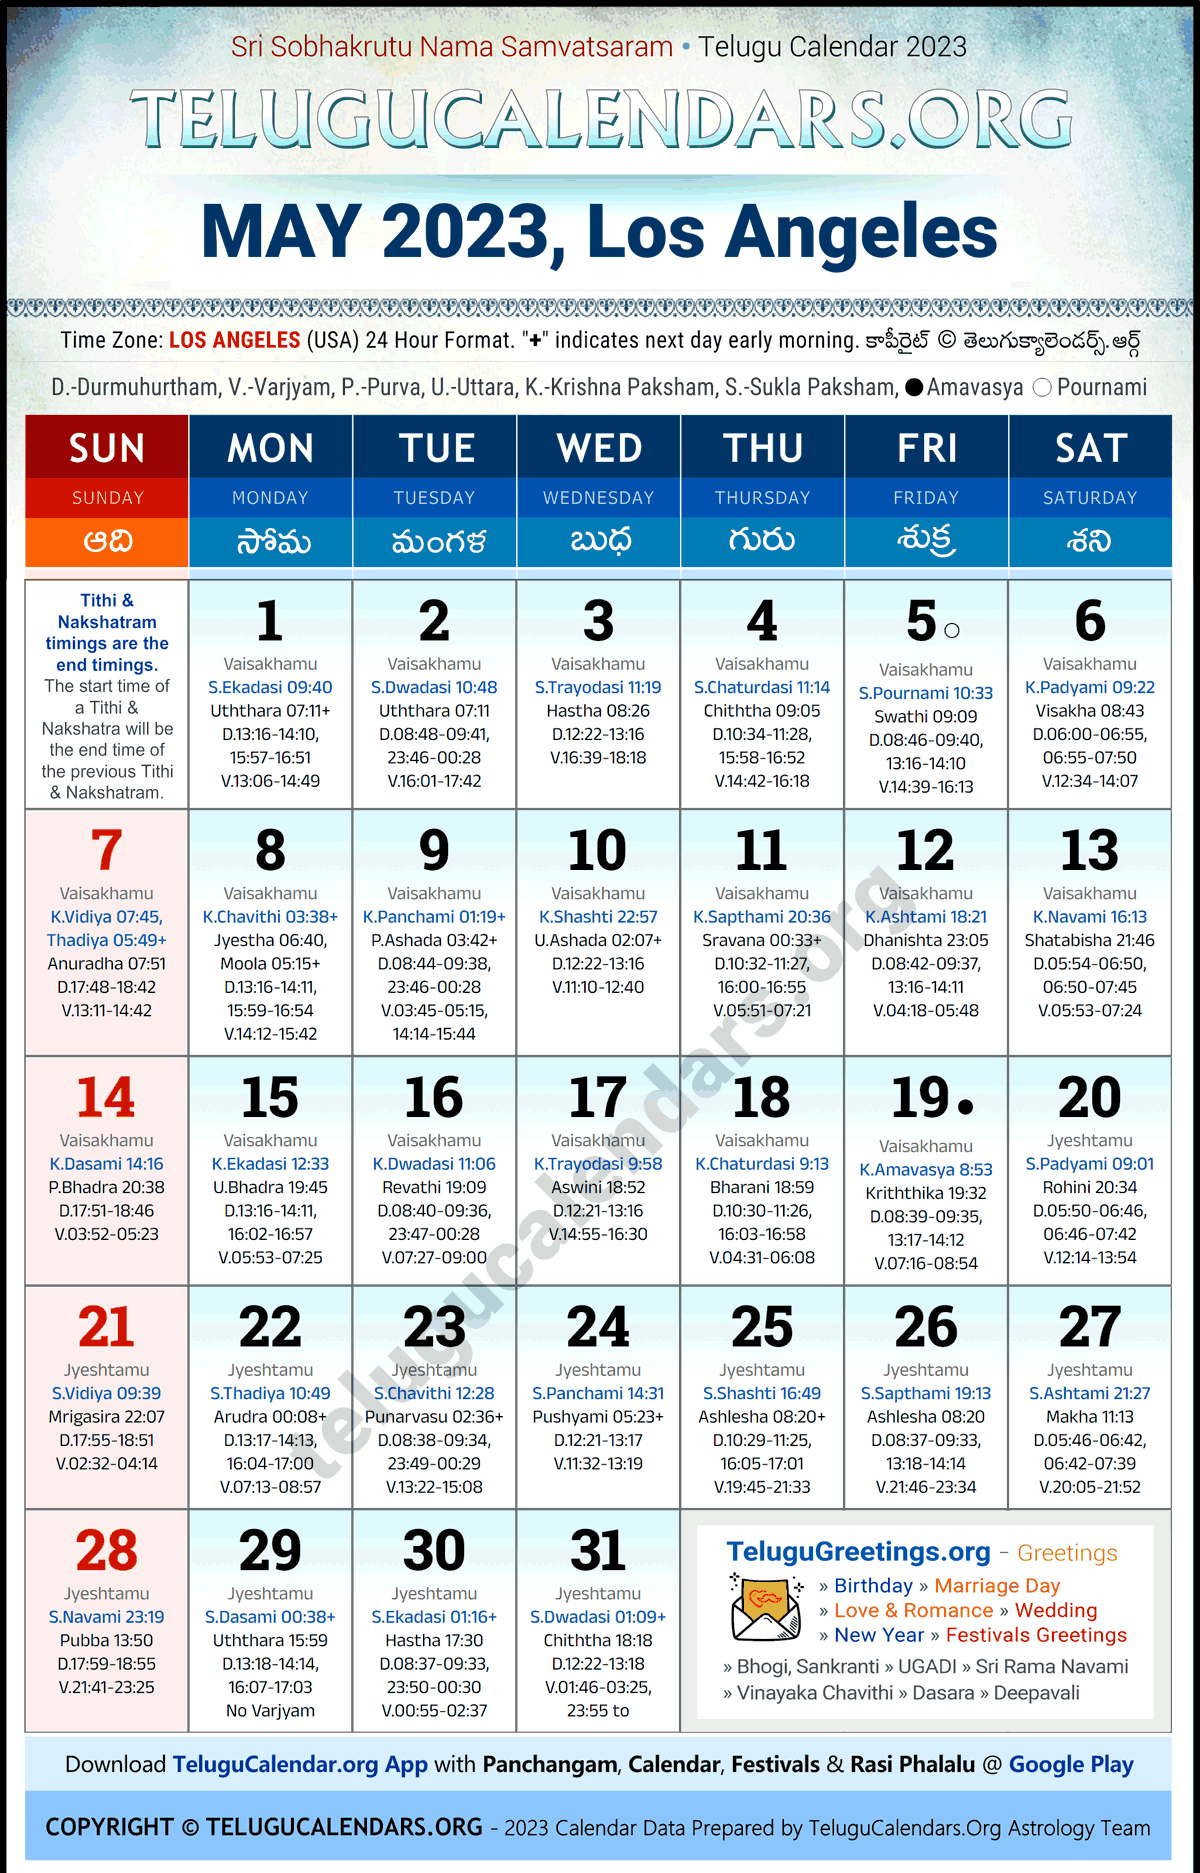 Telugu Calendar 2023 May Festivals for Los Angeles